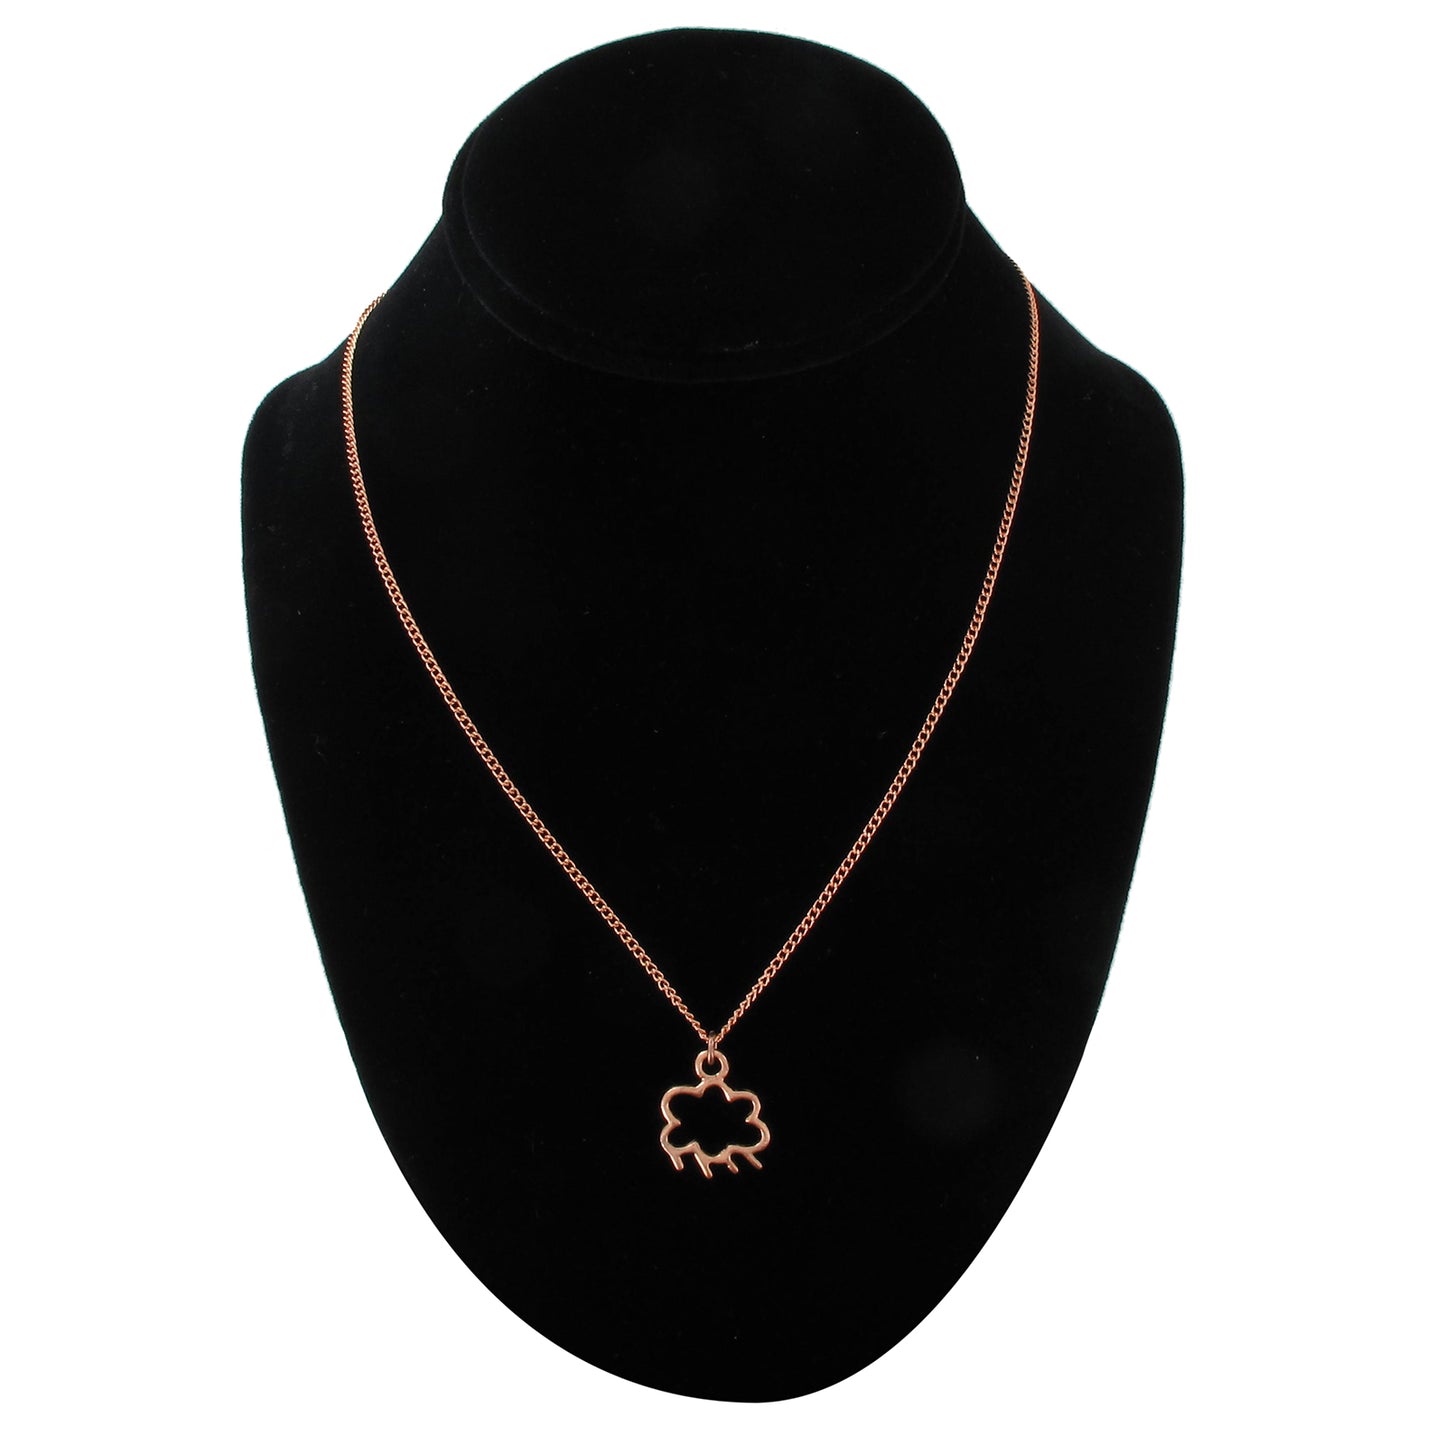 Ky & Co USA Safety Pin Brooch Rain Cloud Charm Rose Gold Tone Fashion Jewelry 2"